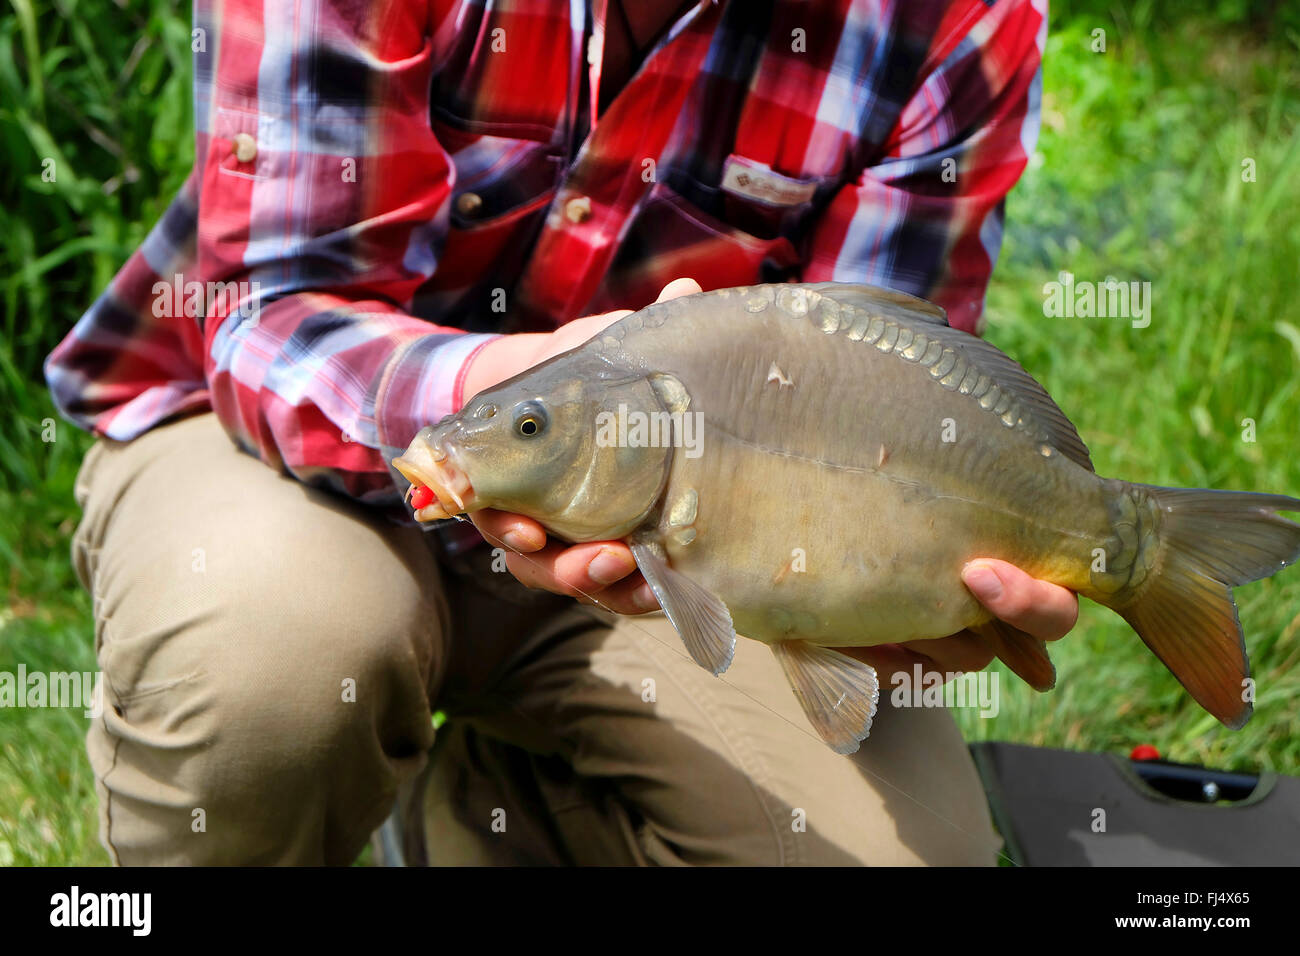 carp, common carp, European carp (Cyprinus carpio), man presenting a freshly caught mirror carp, Germany Stock Photo